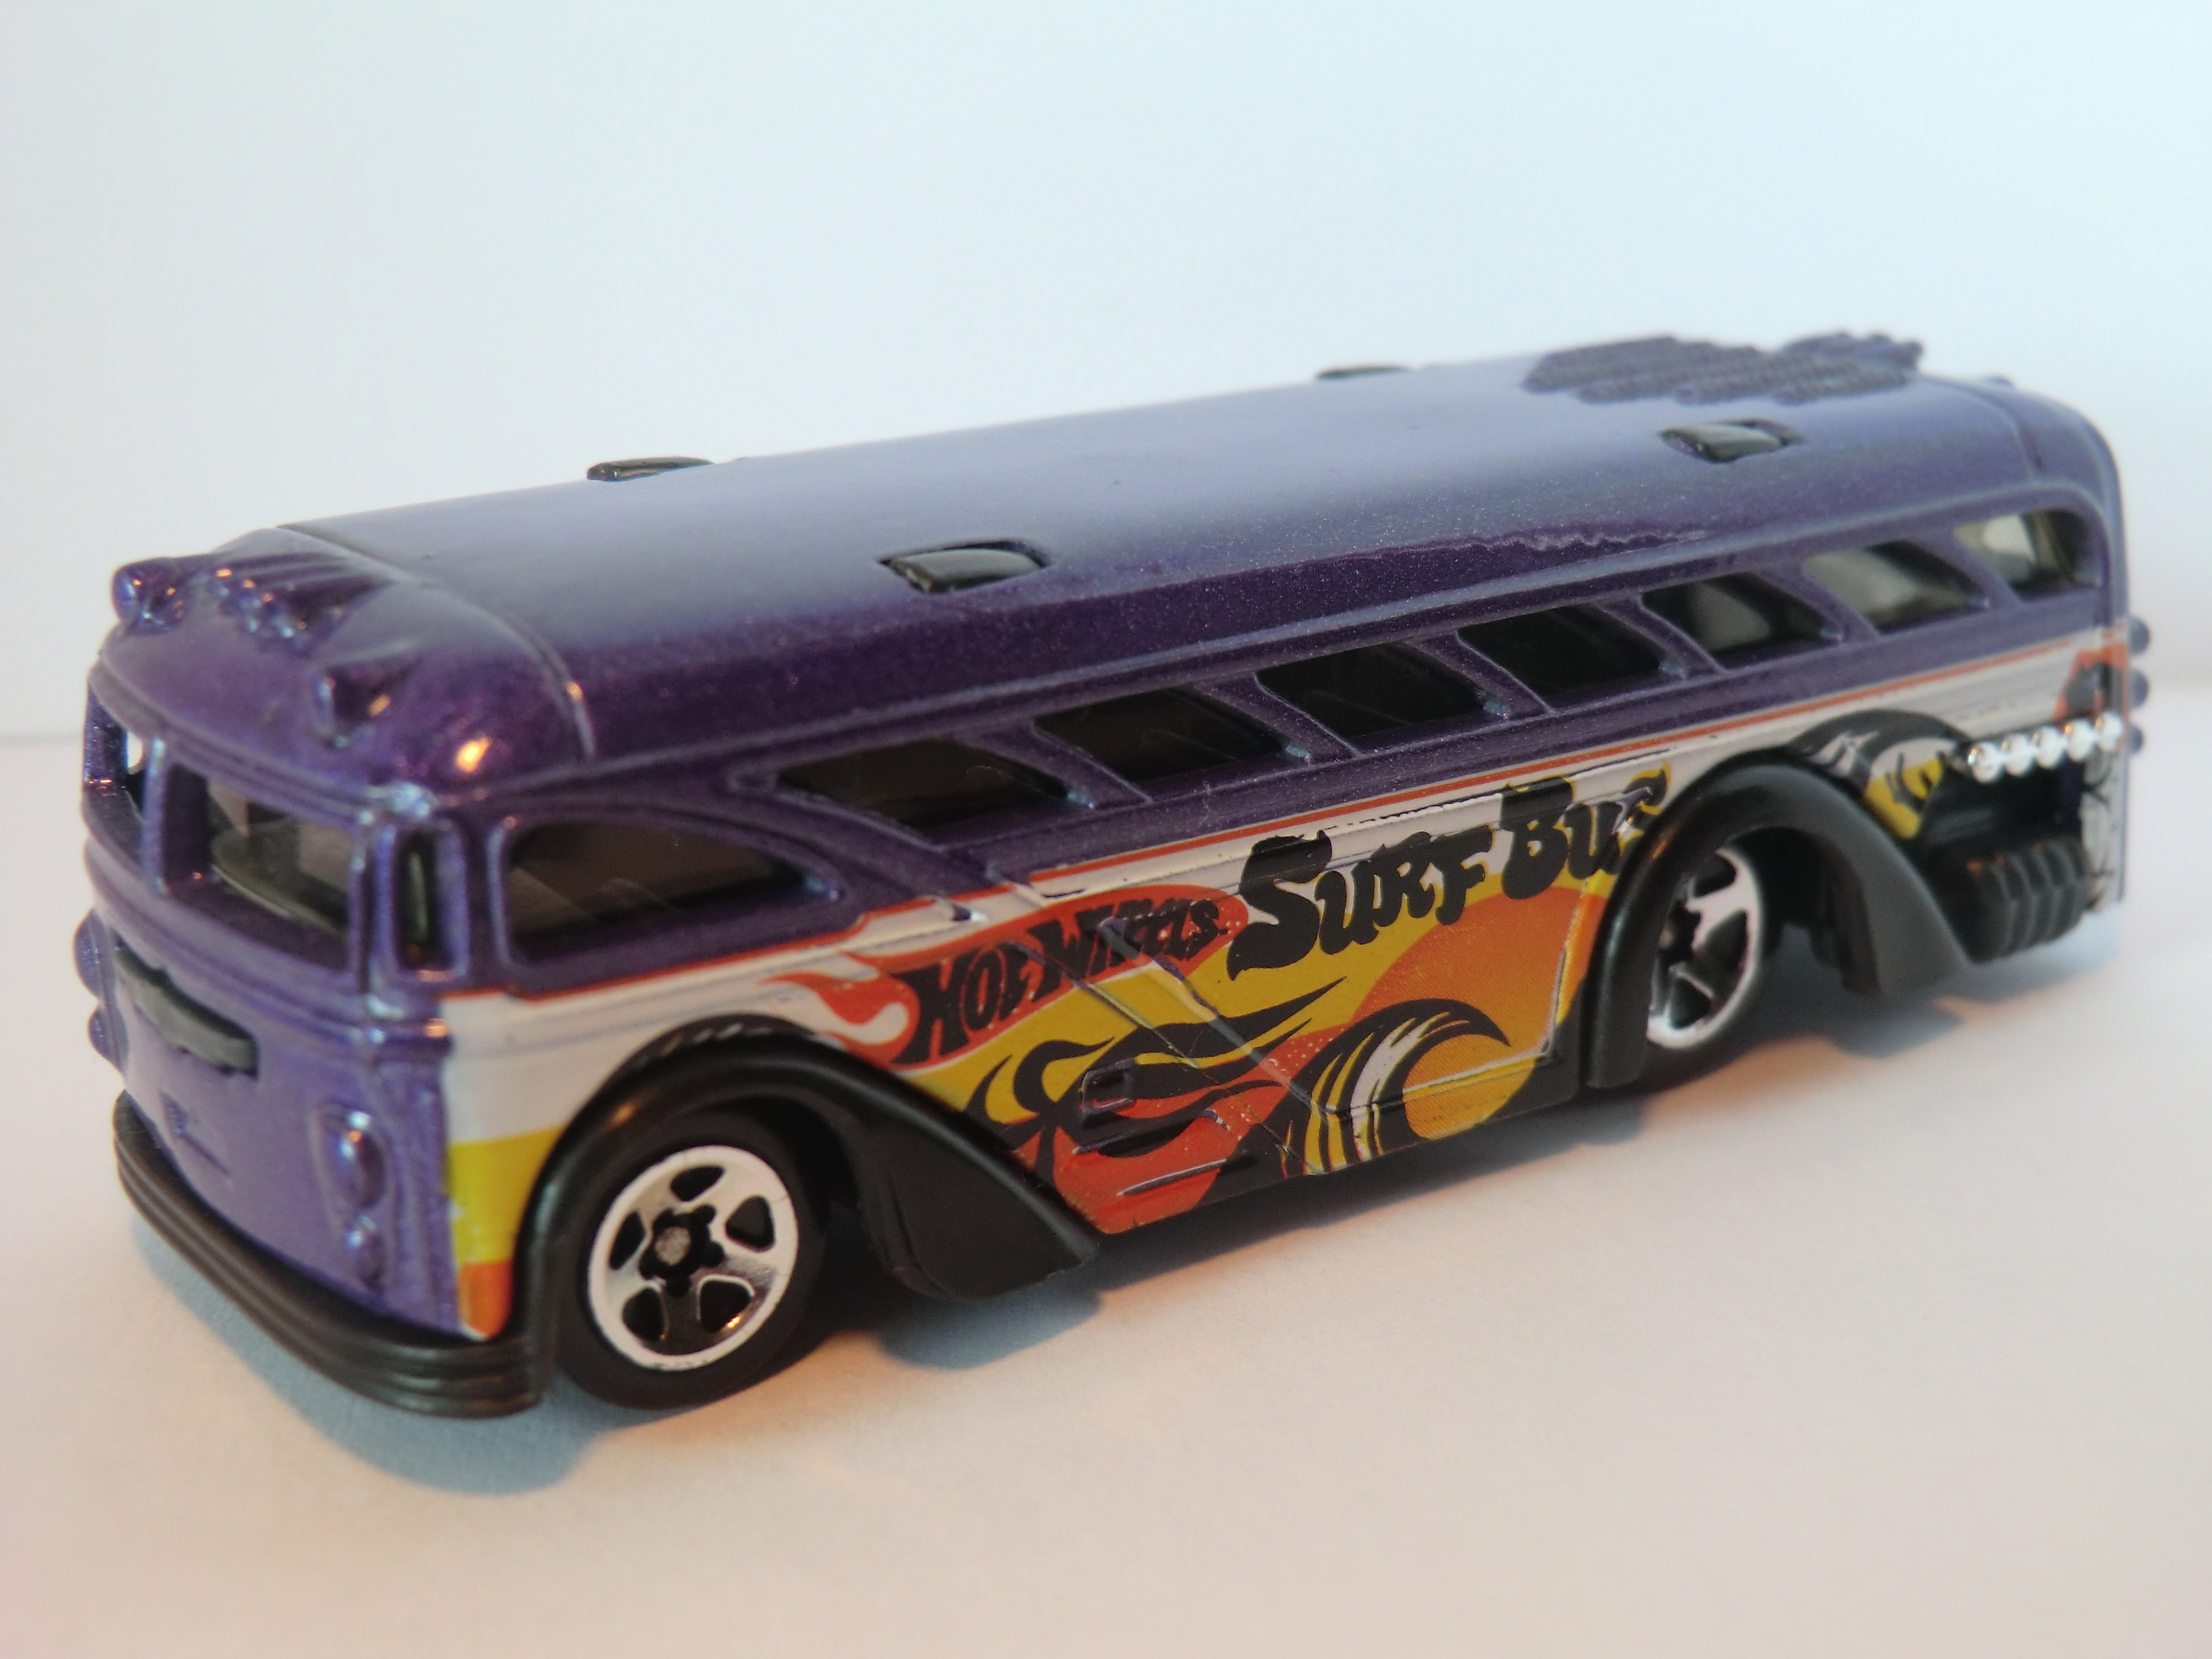 hot wheels surf bus